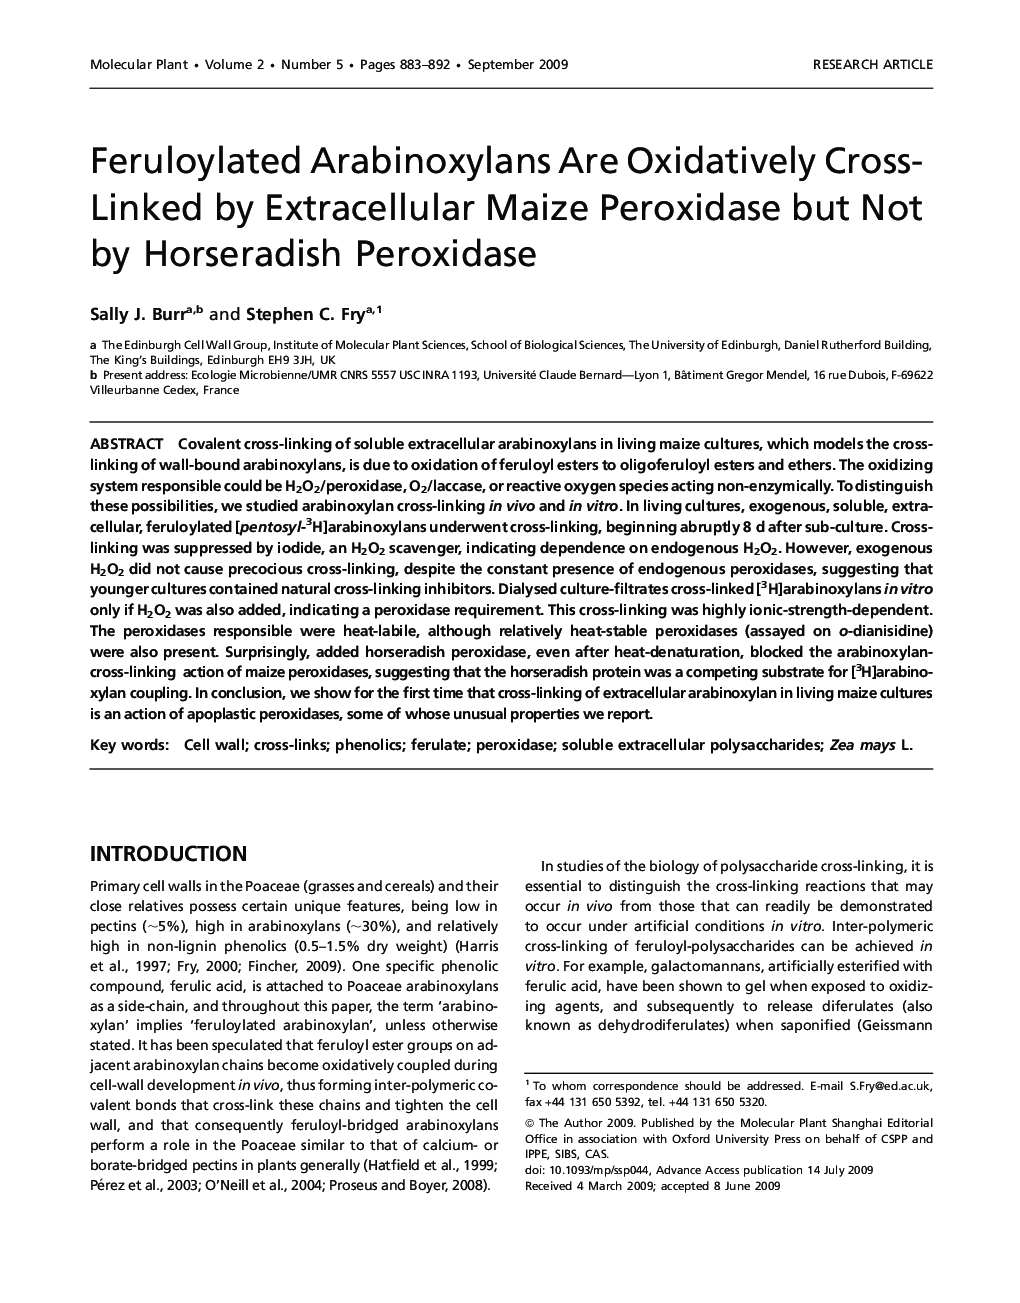 Feruloylated Arabinoxylans Are Oxidatively Cross-Linked by Extracellular Maize Peroxidase but Not by Horseradish Peroxidase 